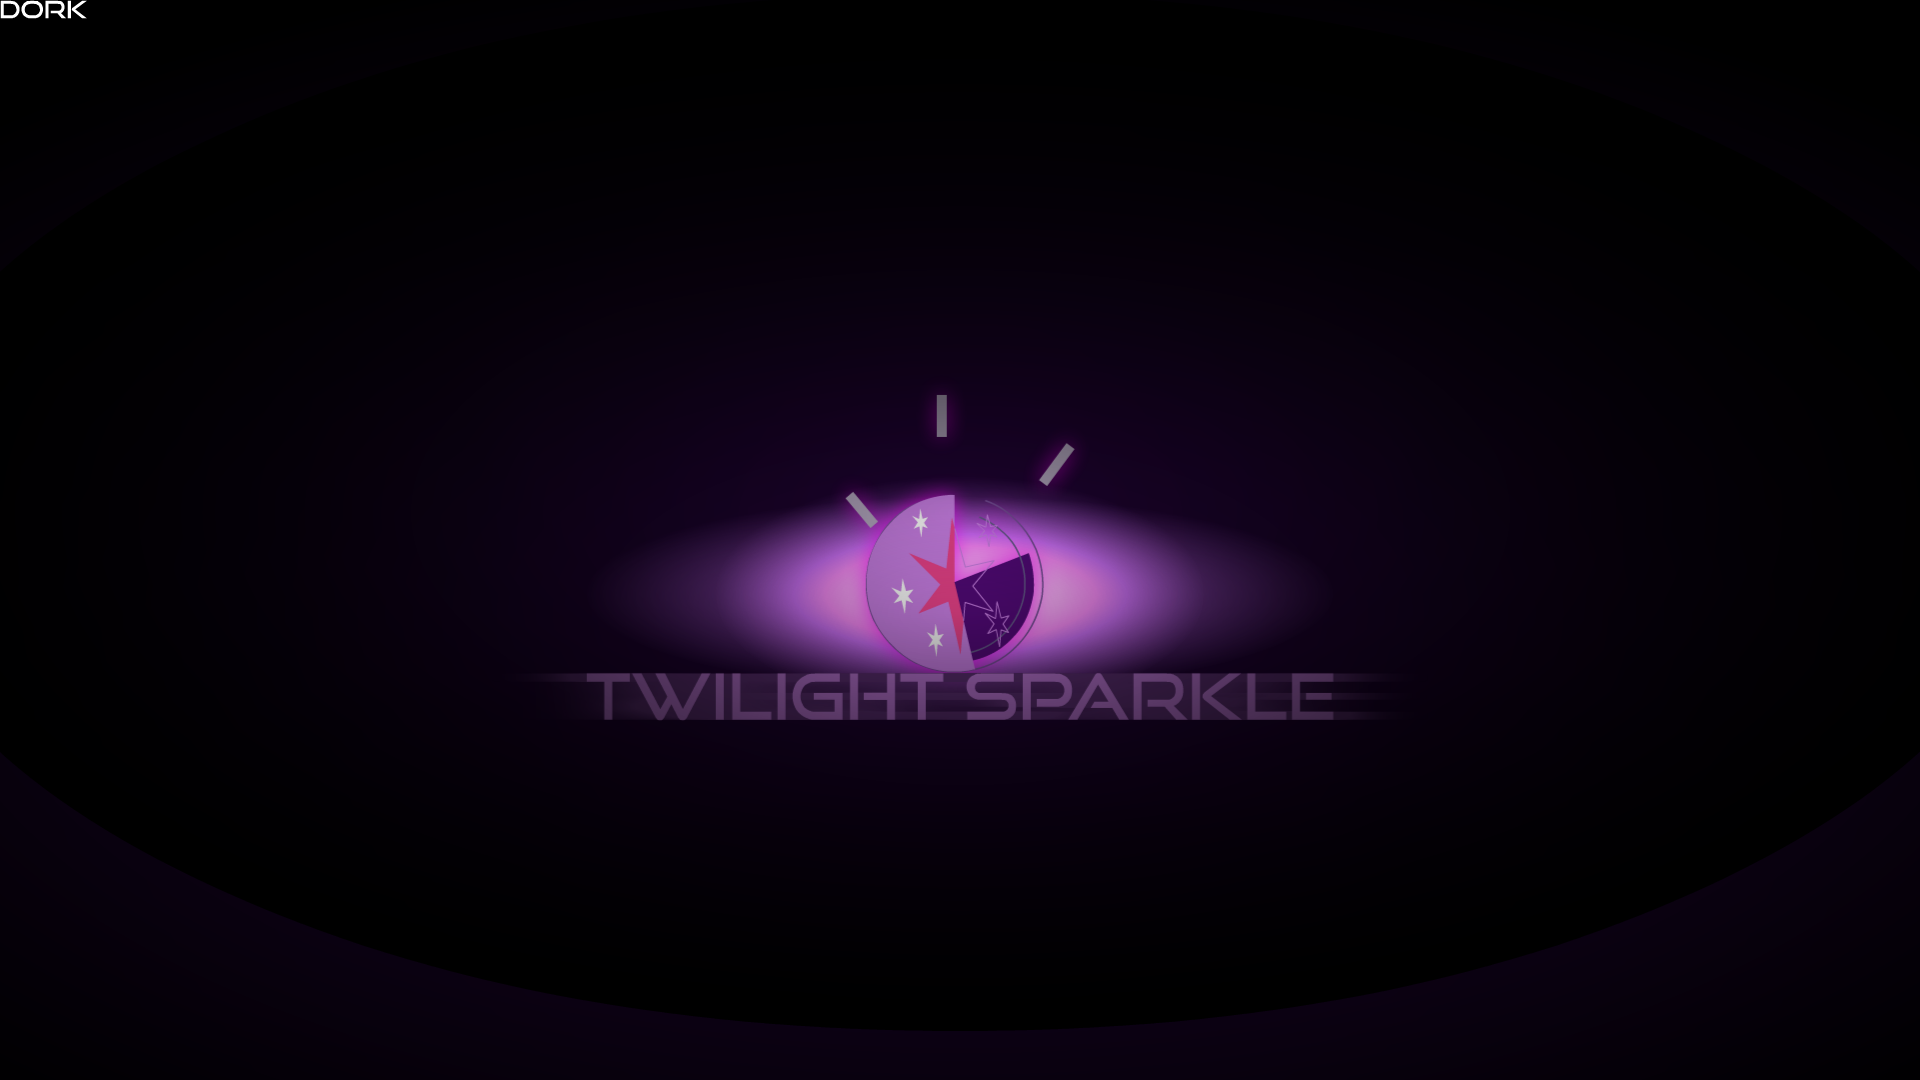 DORK - Twilight Sparkle